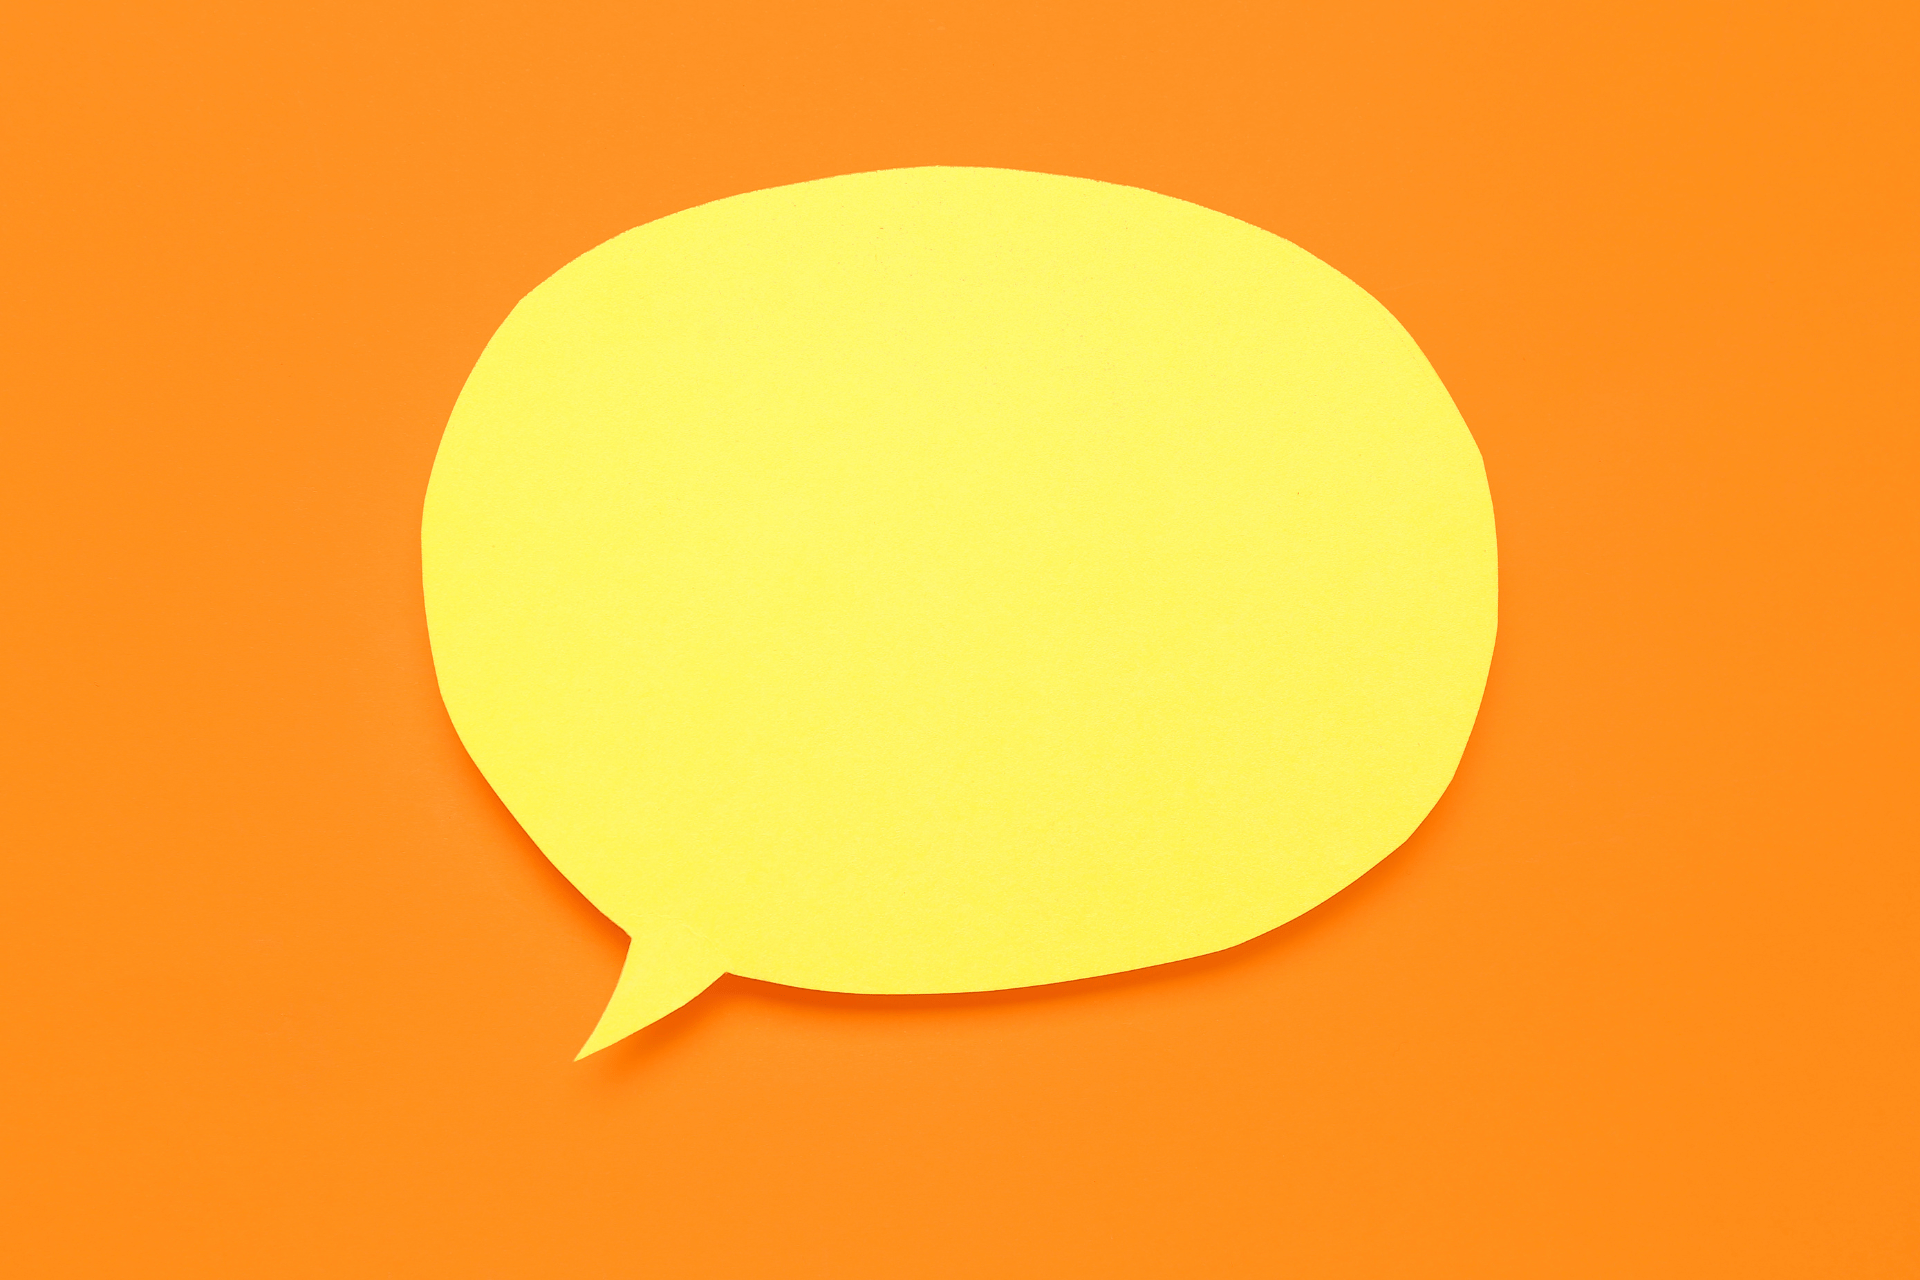 Orange background with yellow empty speech bubble